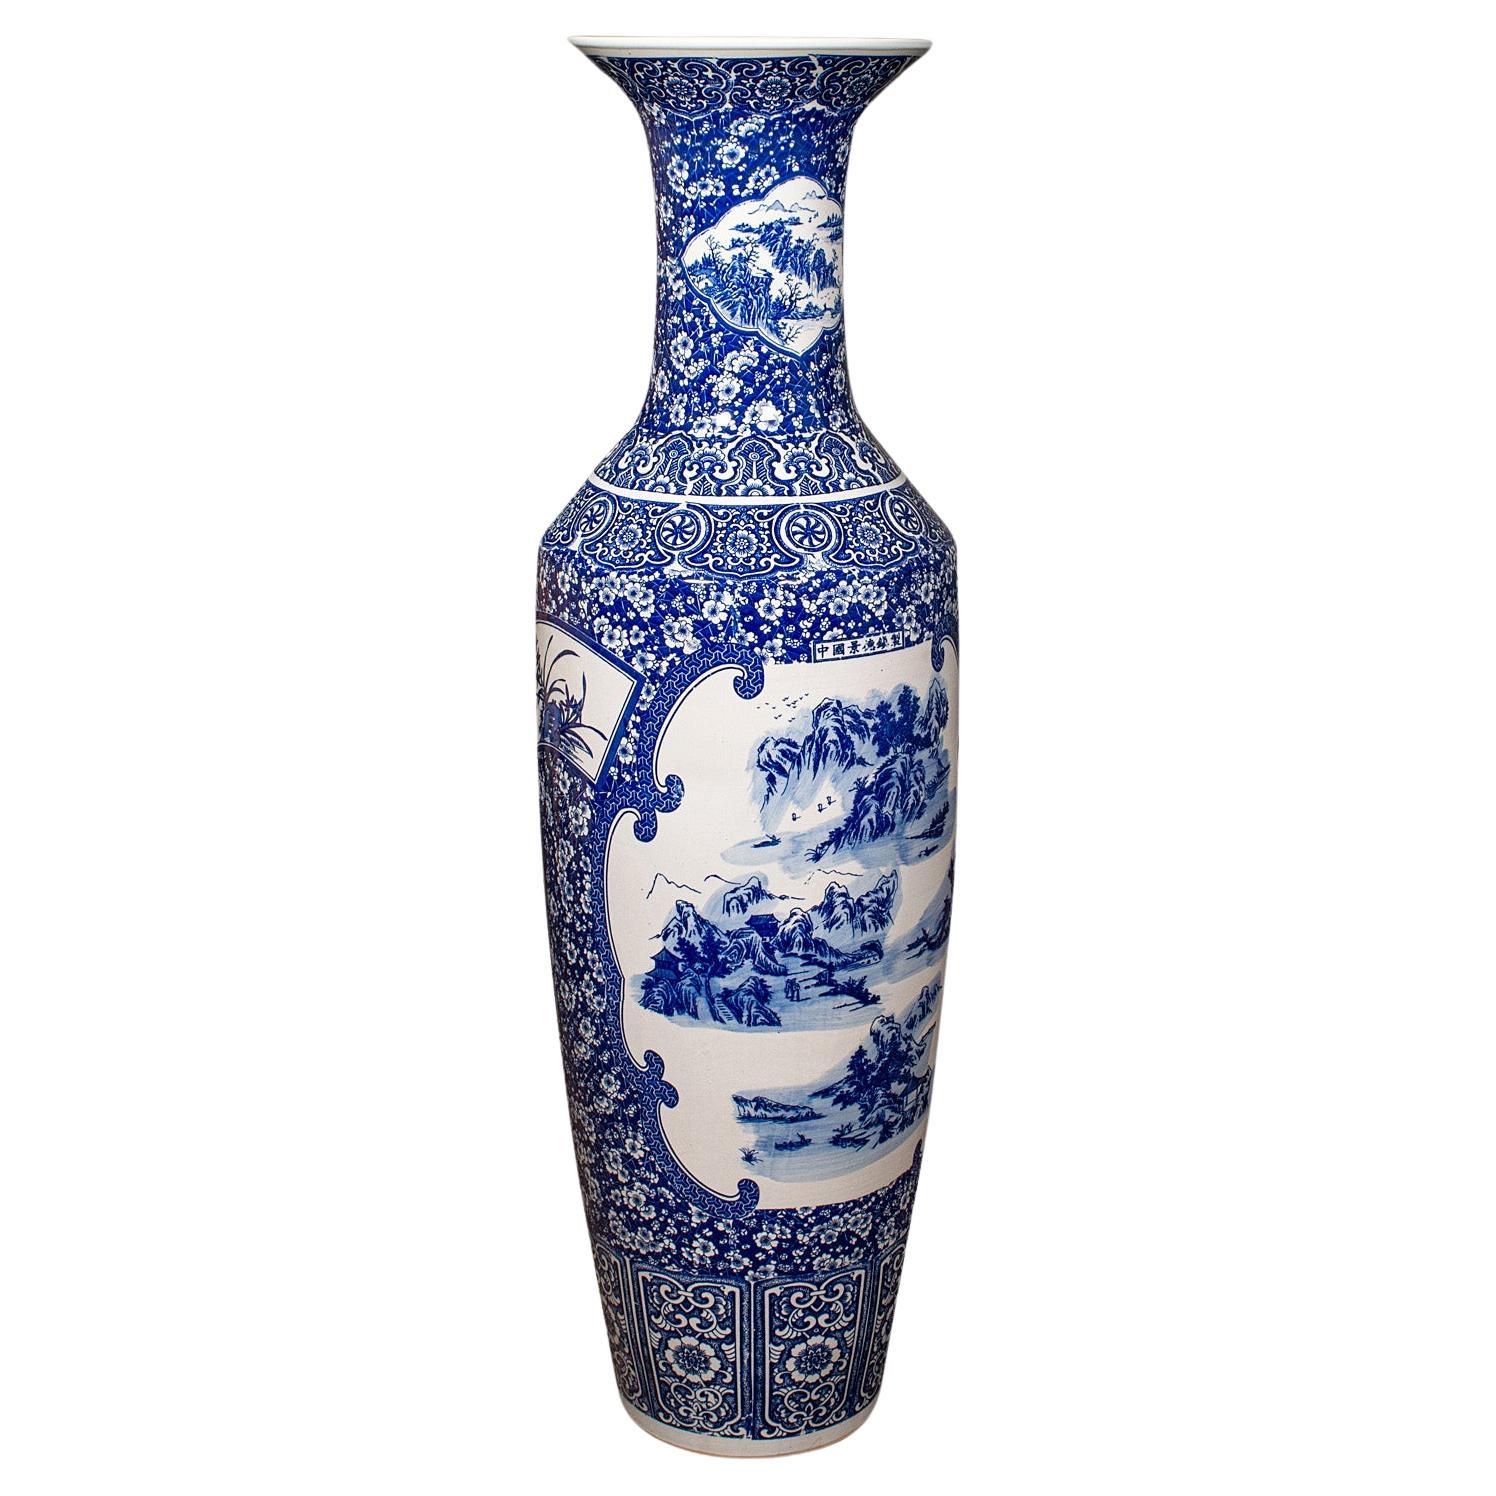 4' Tall Vintage Floor Vase, Chinese, Blue & White, Ceramic, Display, Art Deco For Sale